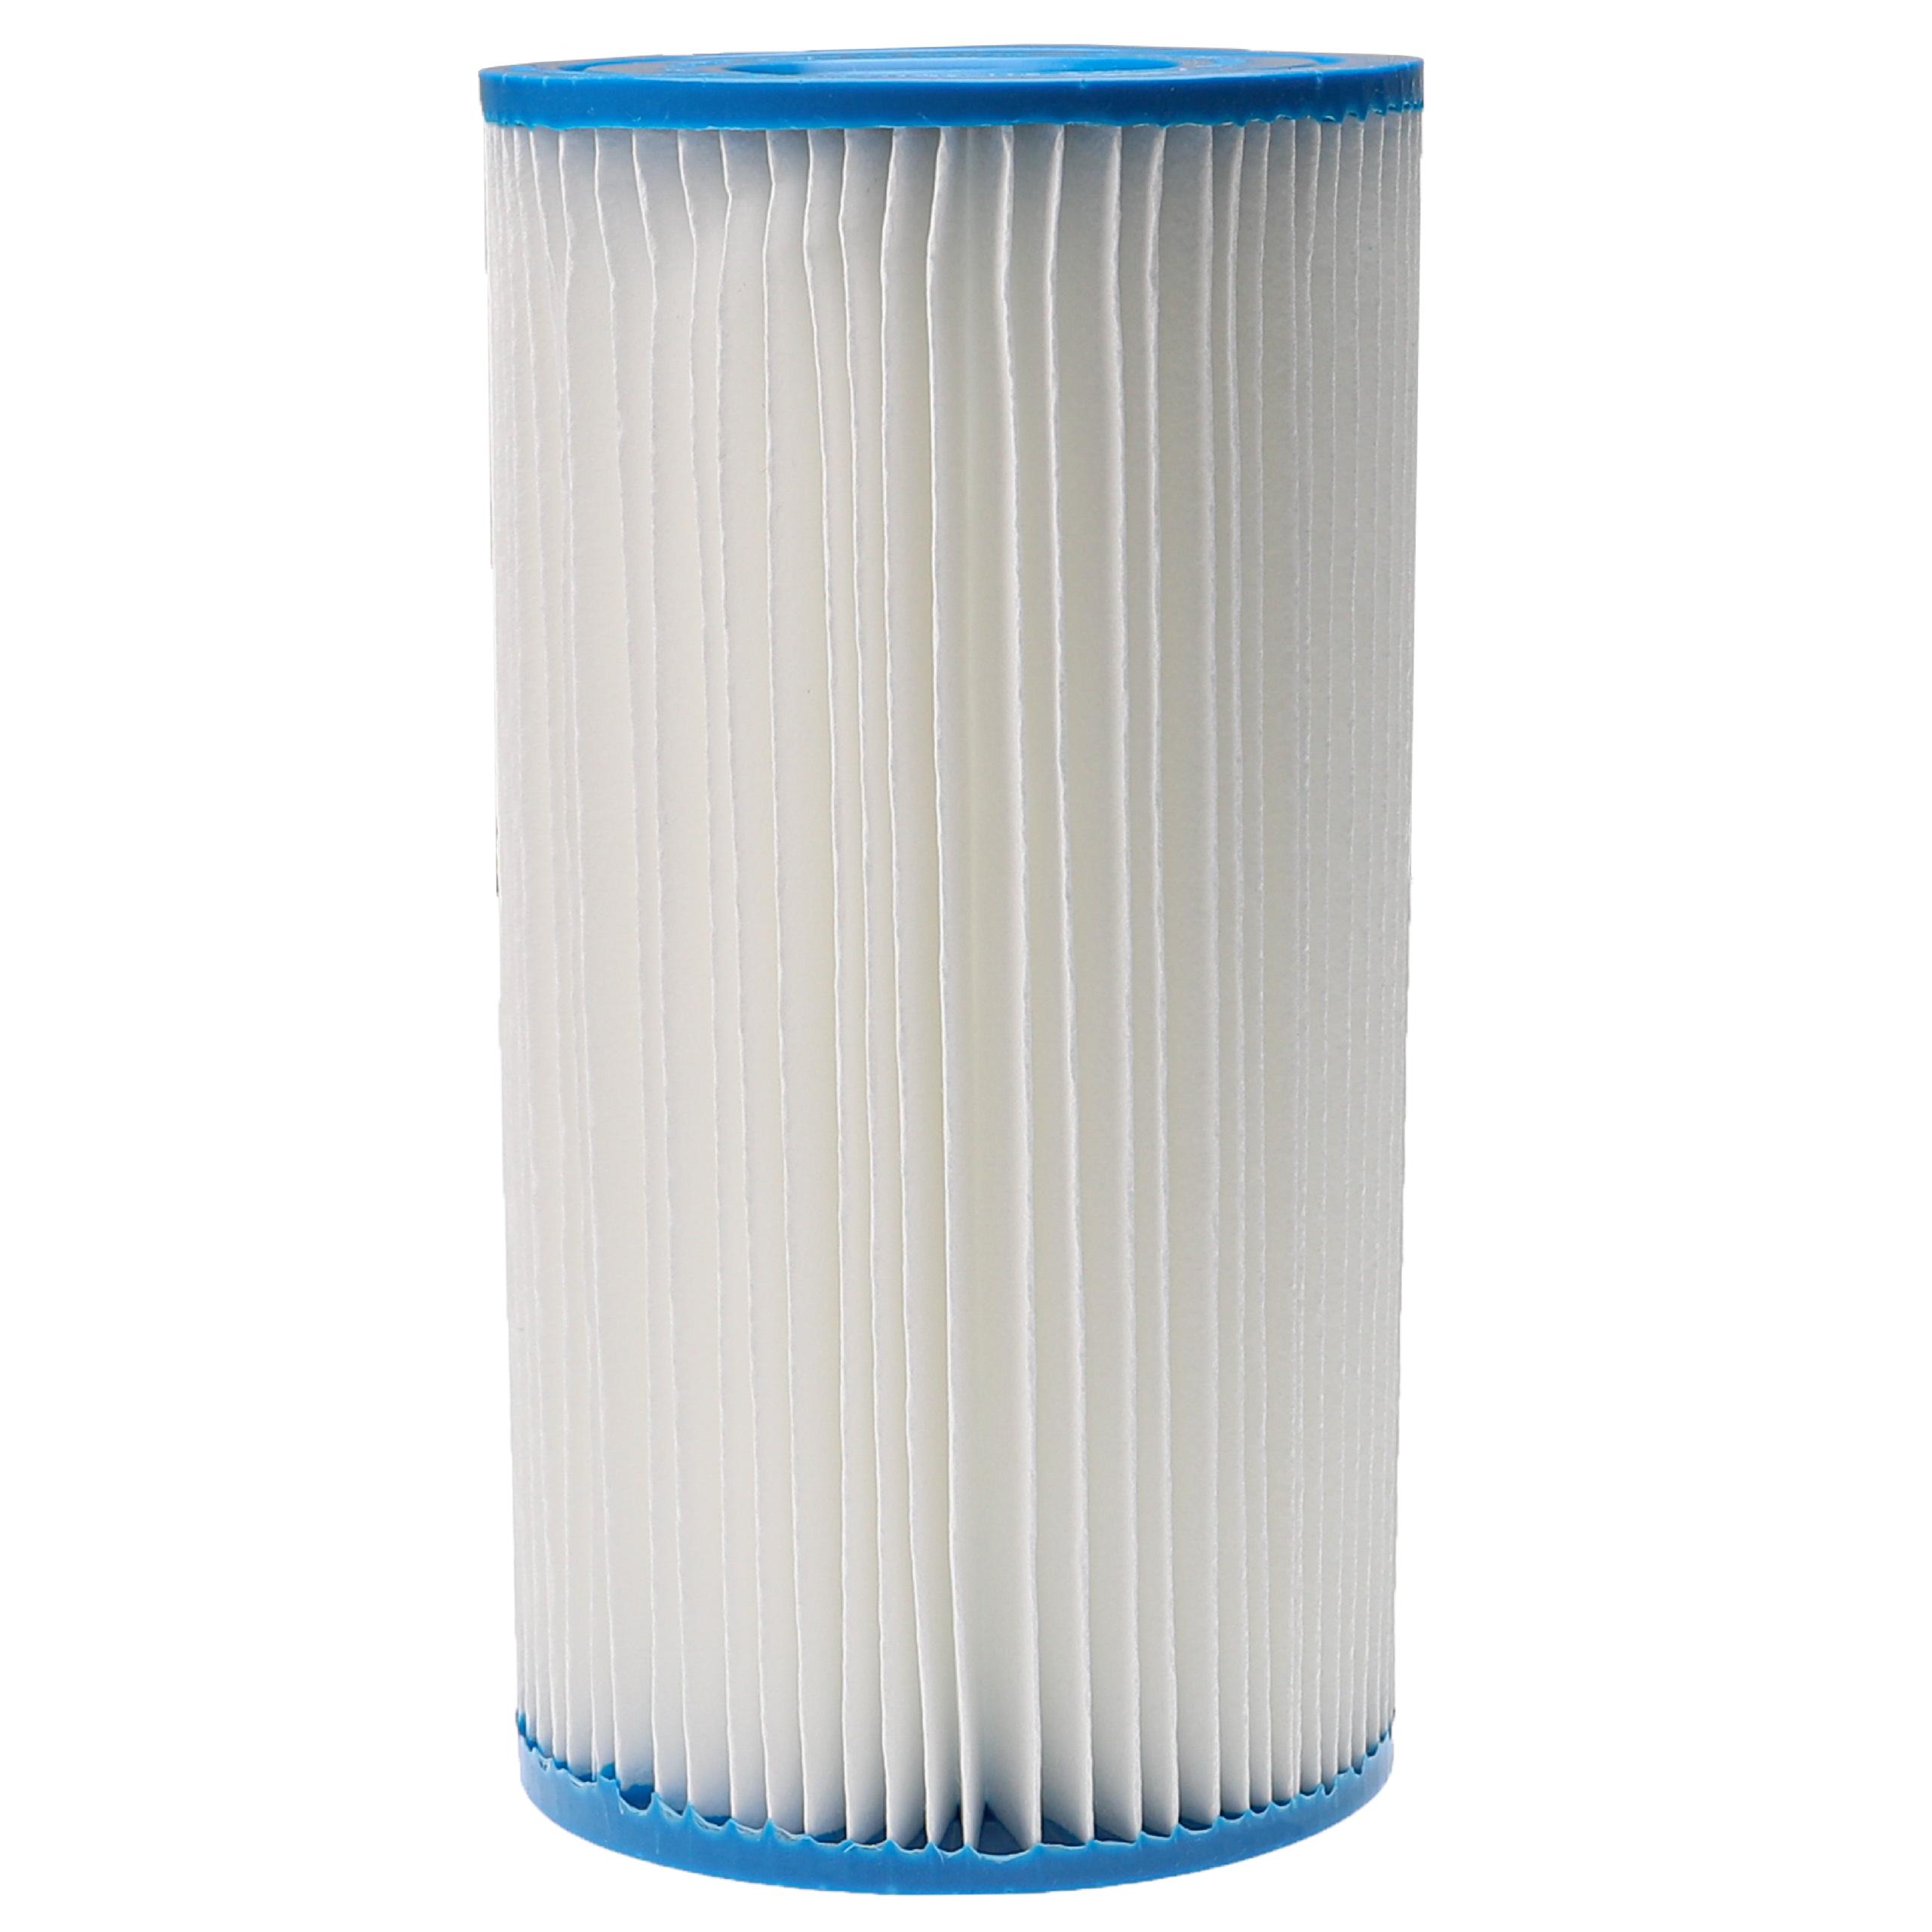 Cartucho de filtro reemplaza Intex filtro tipo A para bomba de filtración - blanco / azul